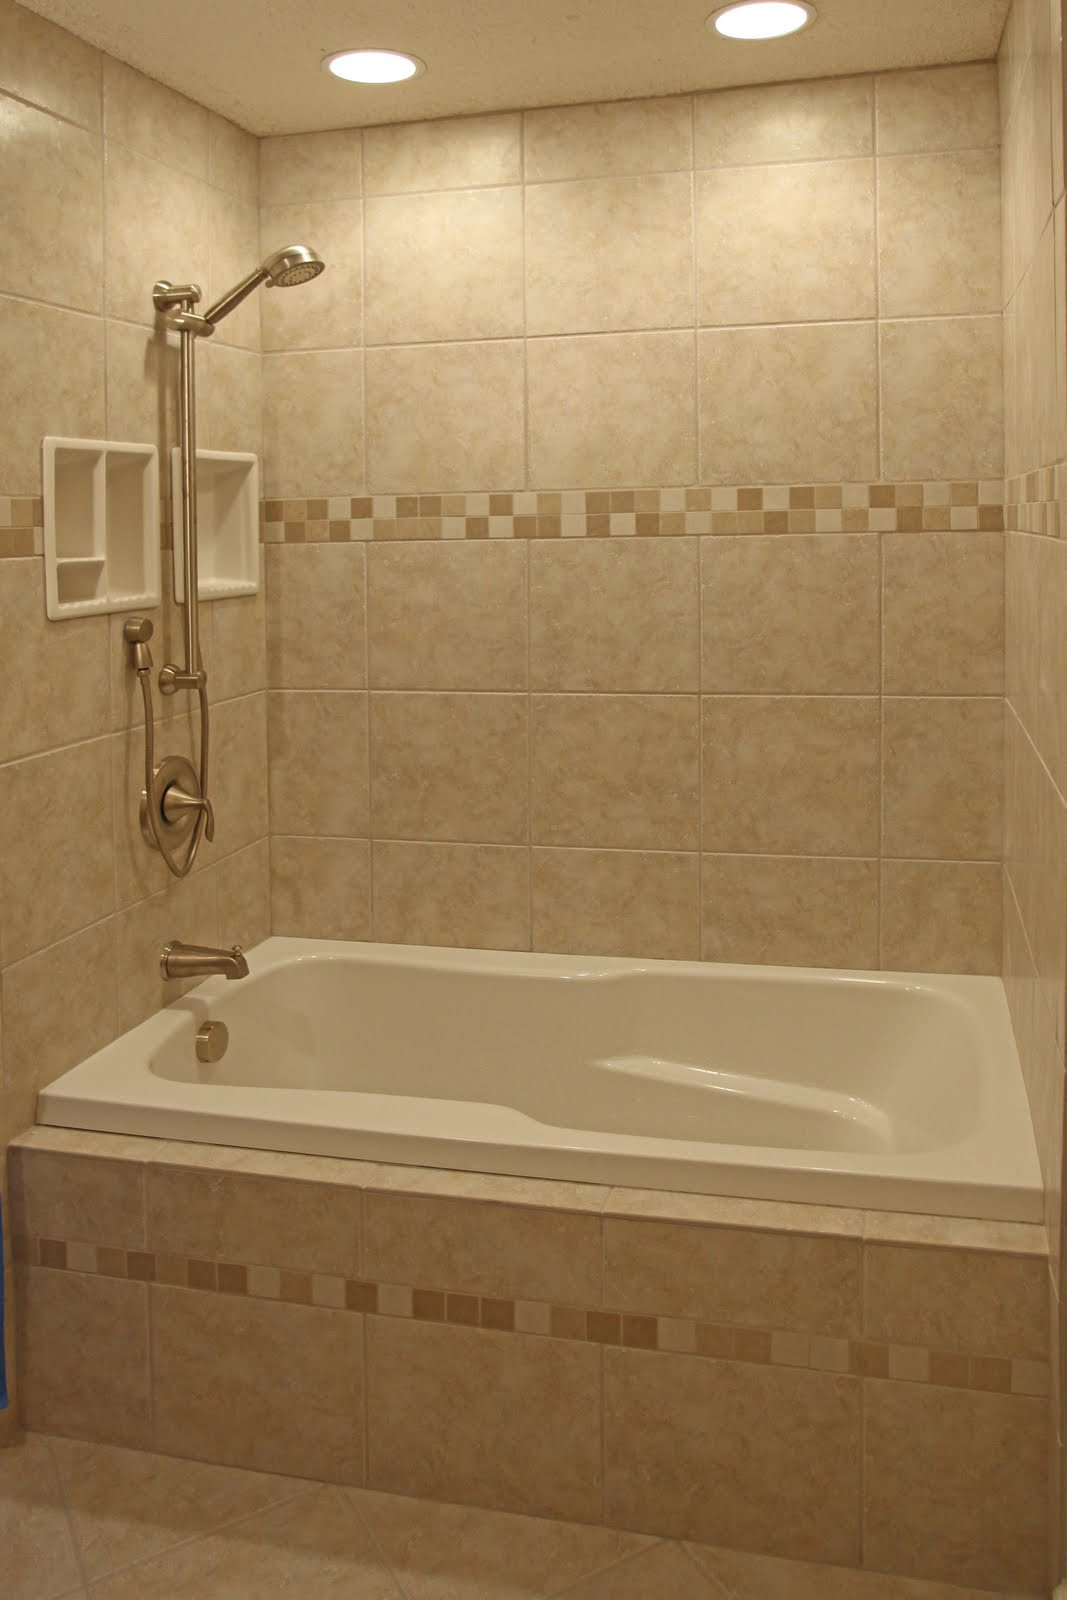 Bathroom And Shower Tile Ideas
 Bathroom Remodeling Design Ideas Tile Shower Niches